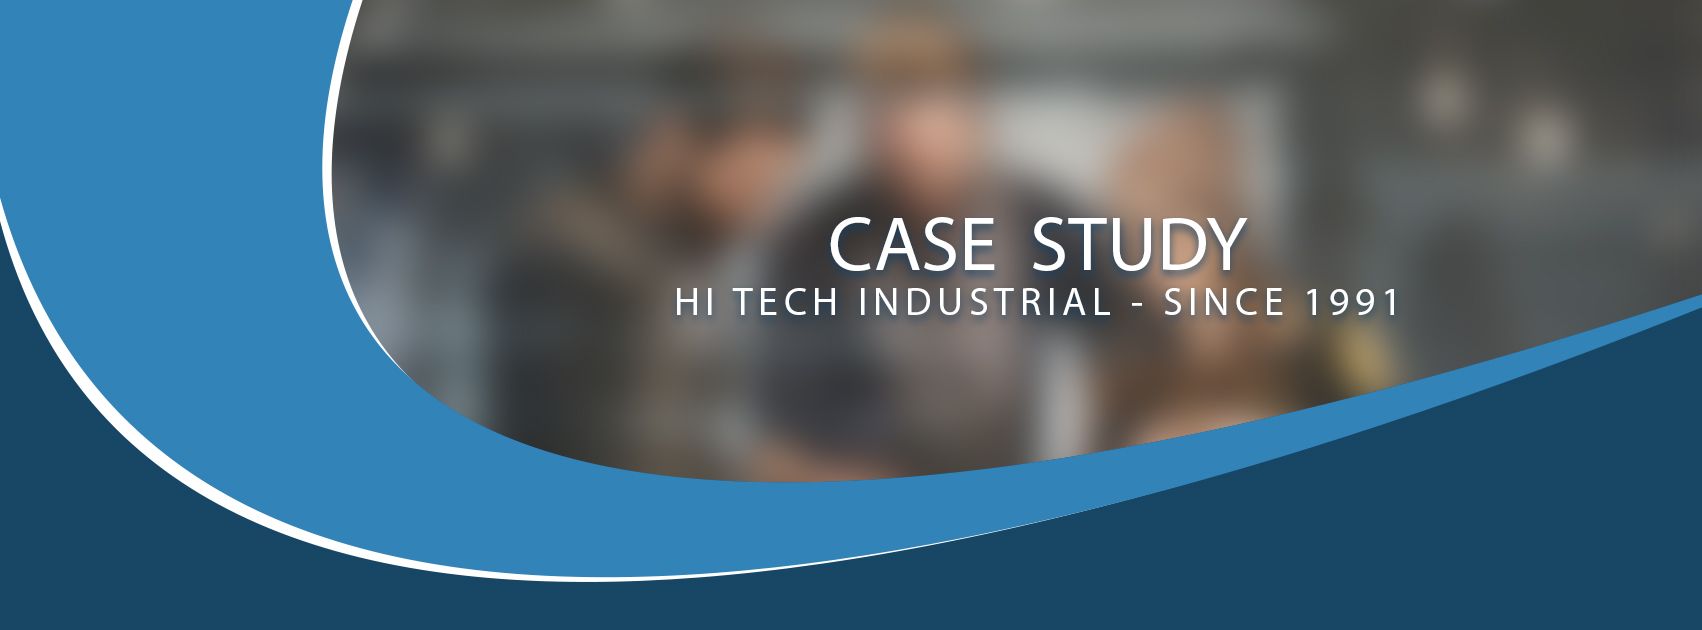 case study hitech industrial